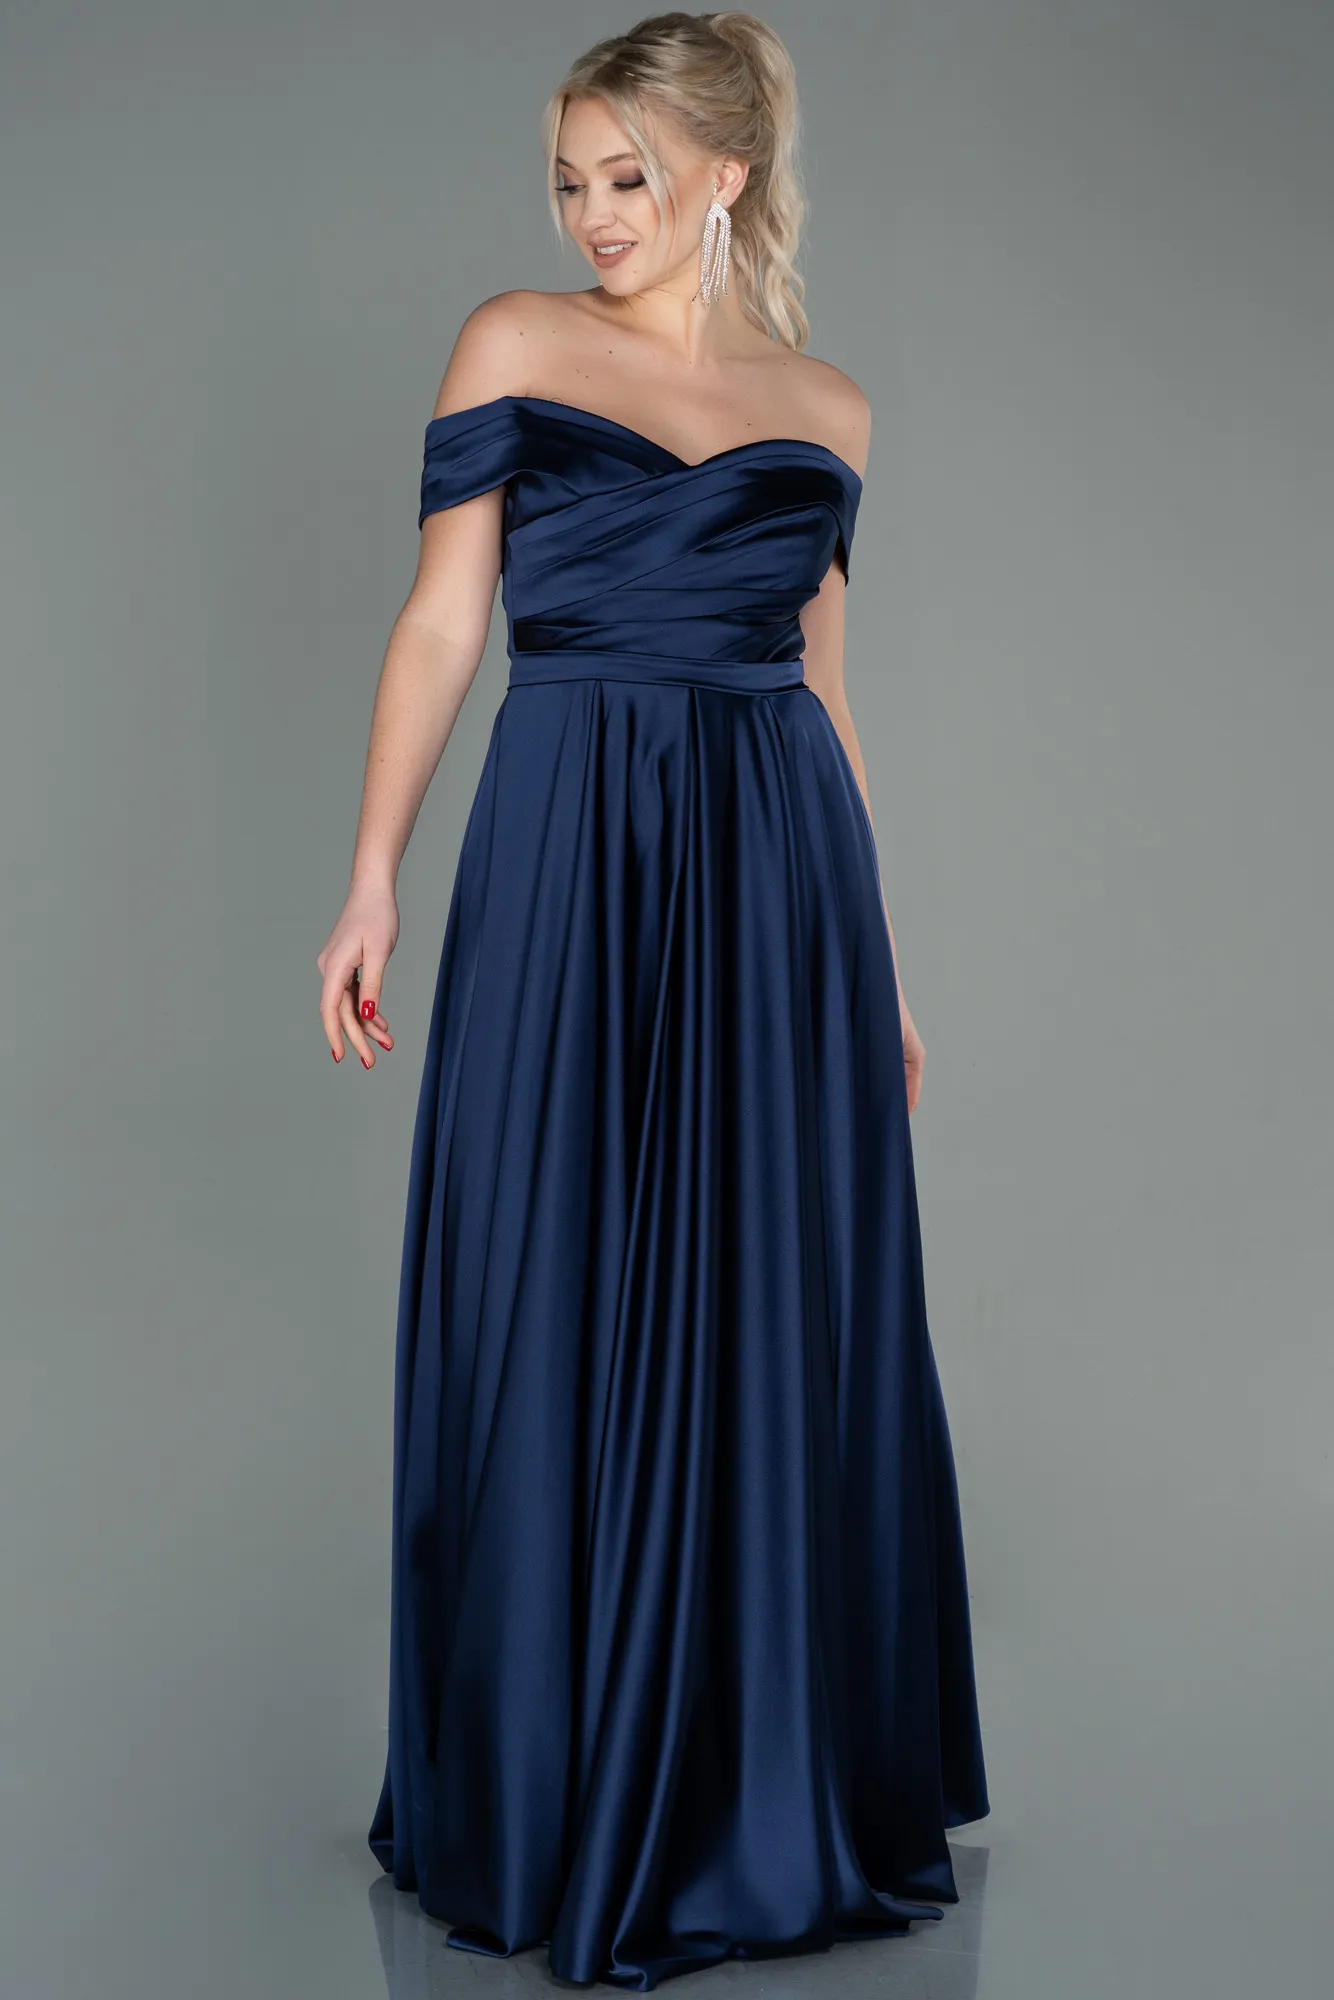 Navy Blue-Long Satin Evening Dress ABU2750